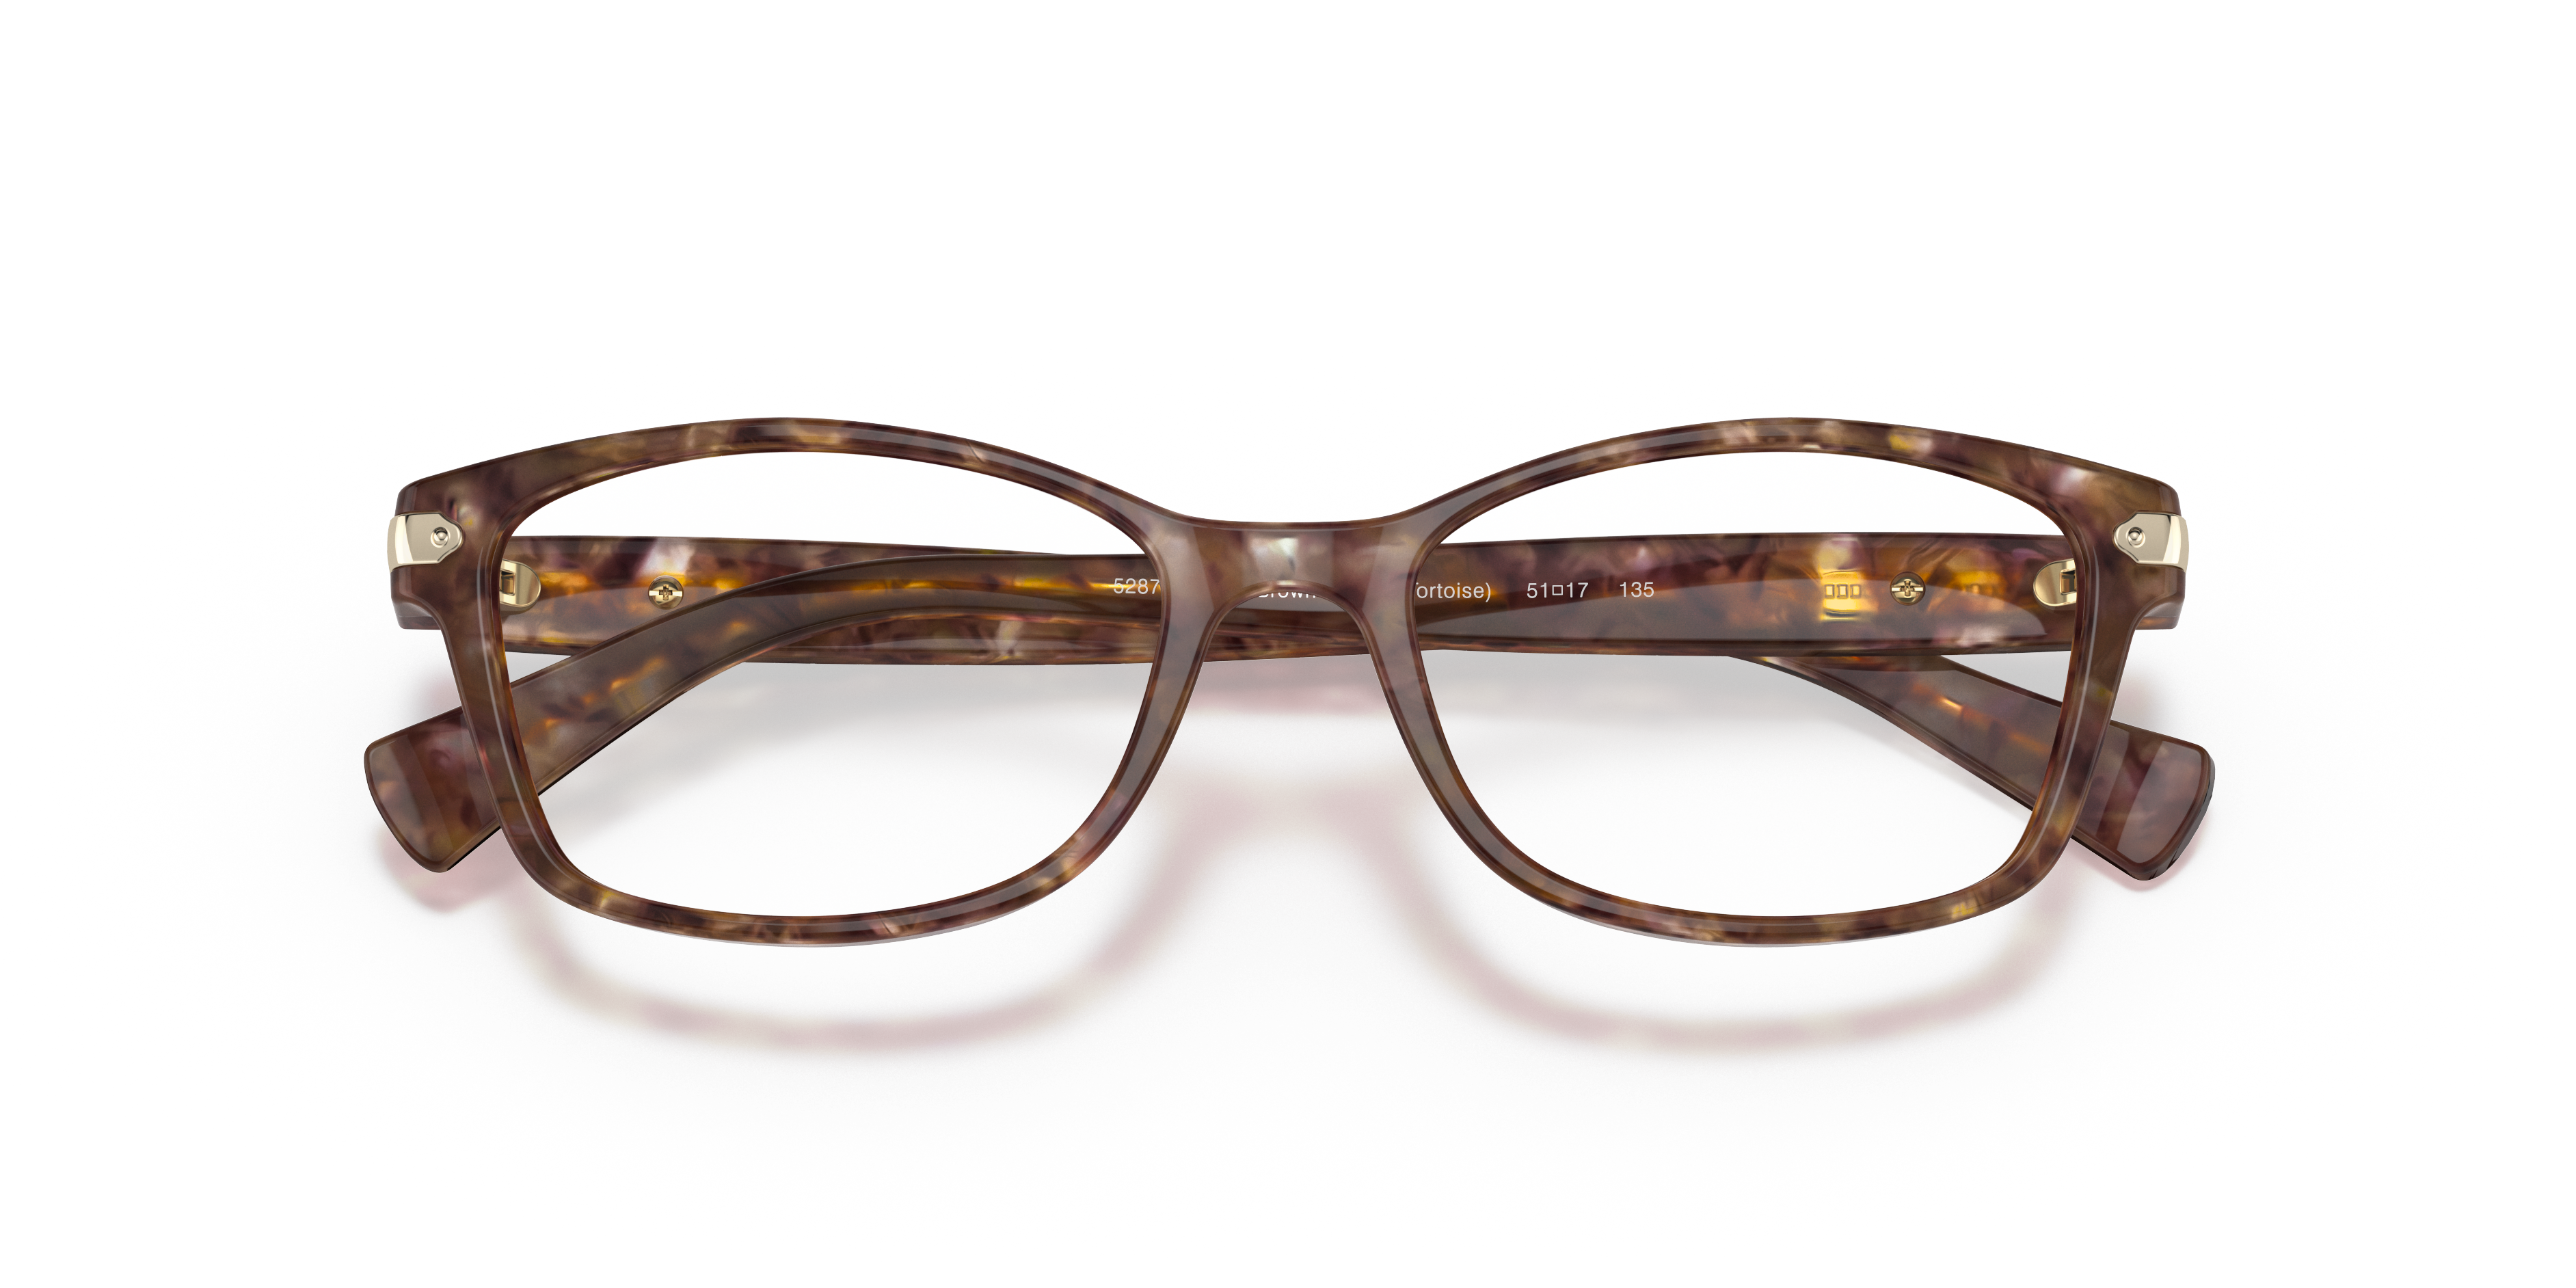 Folded Coach HC 6065 (5287) Glasses Transparent / Brown